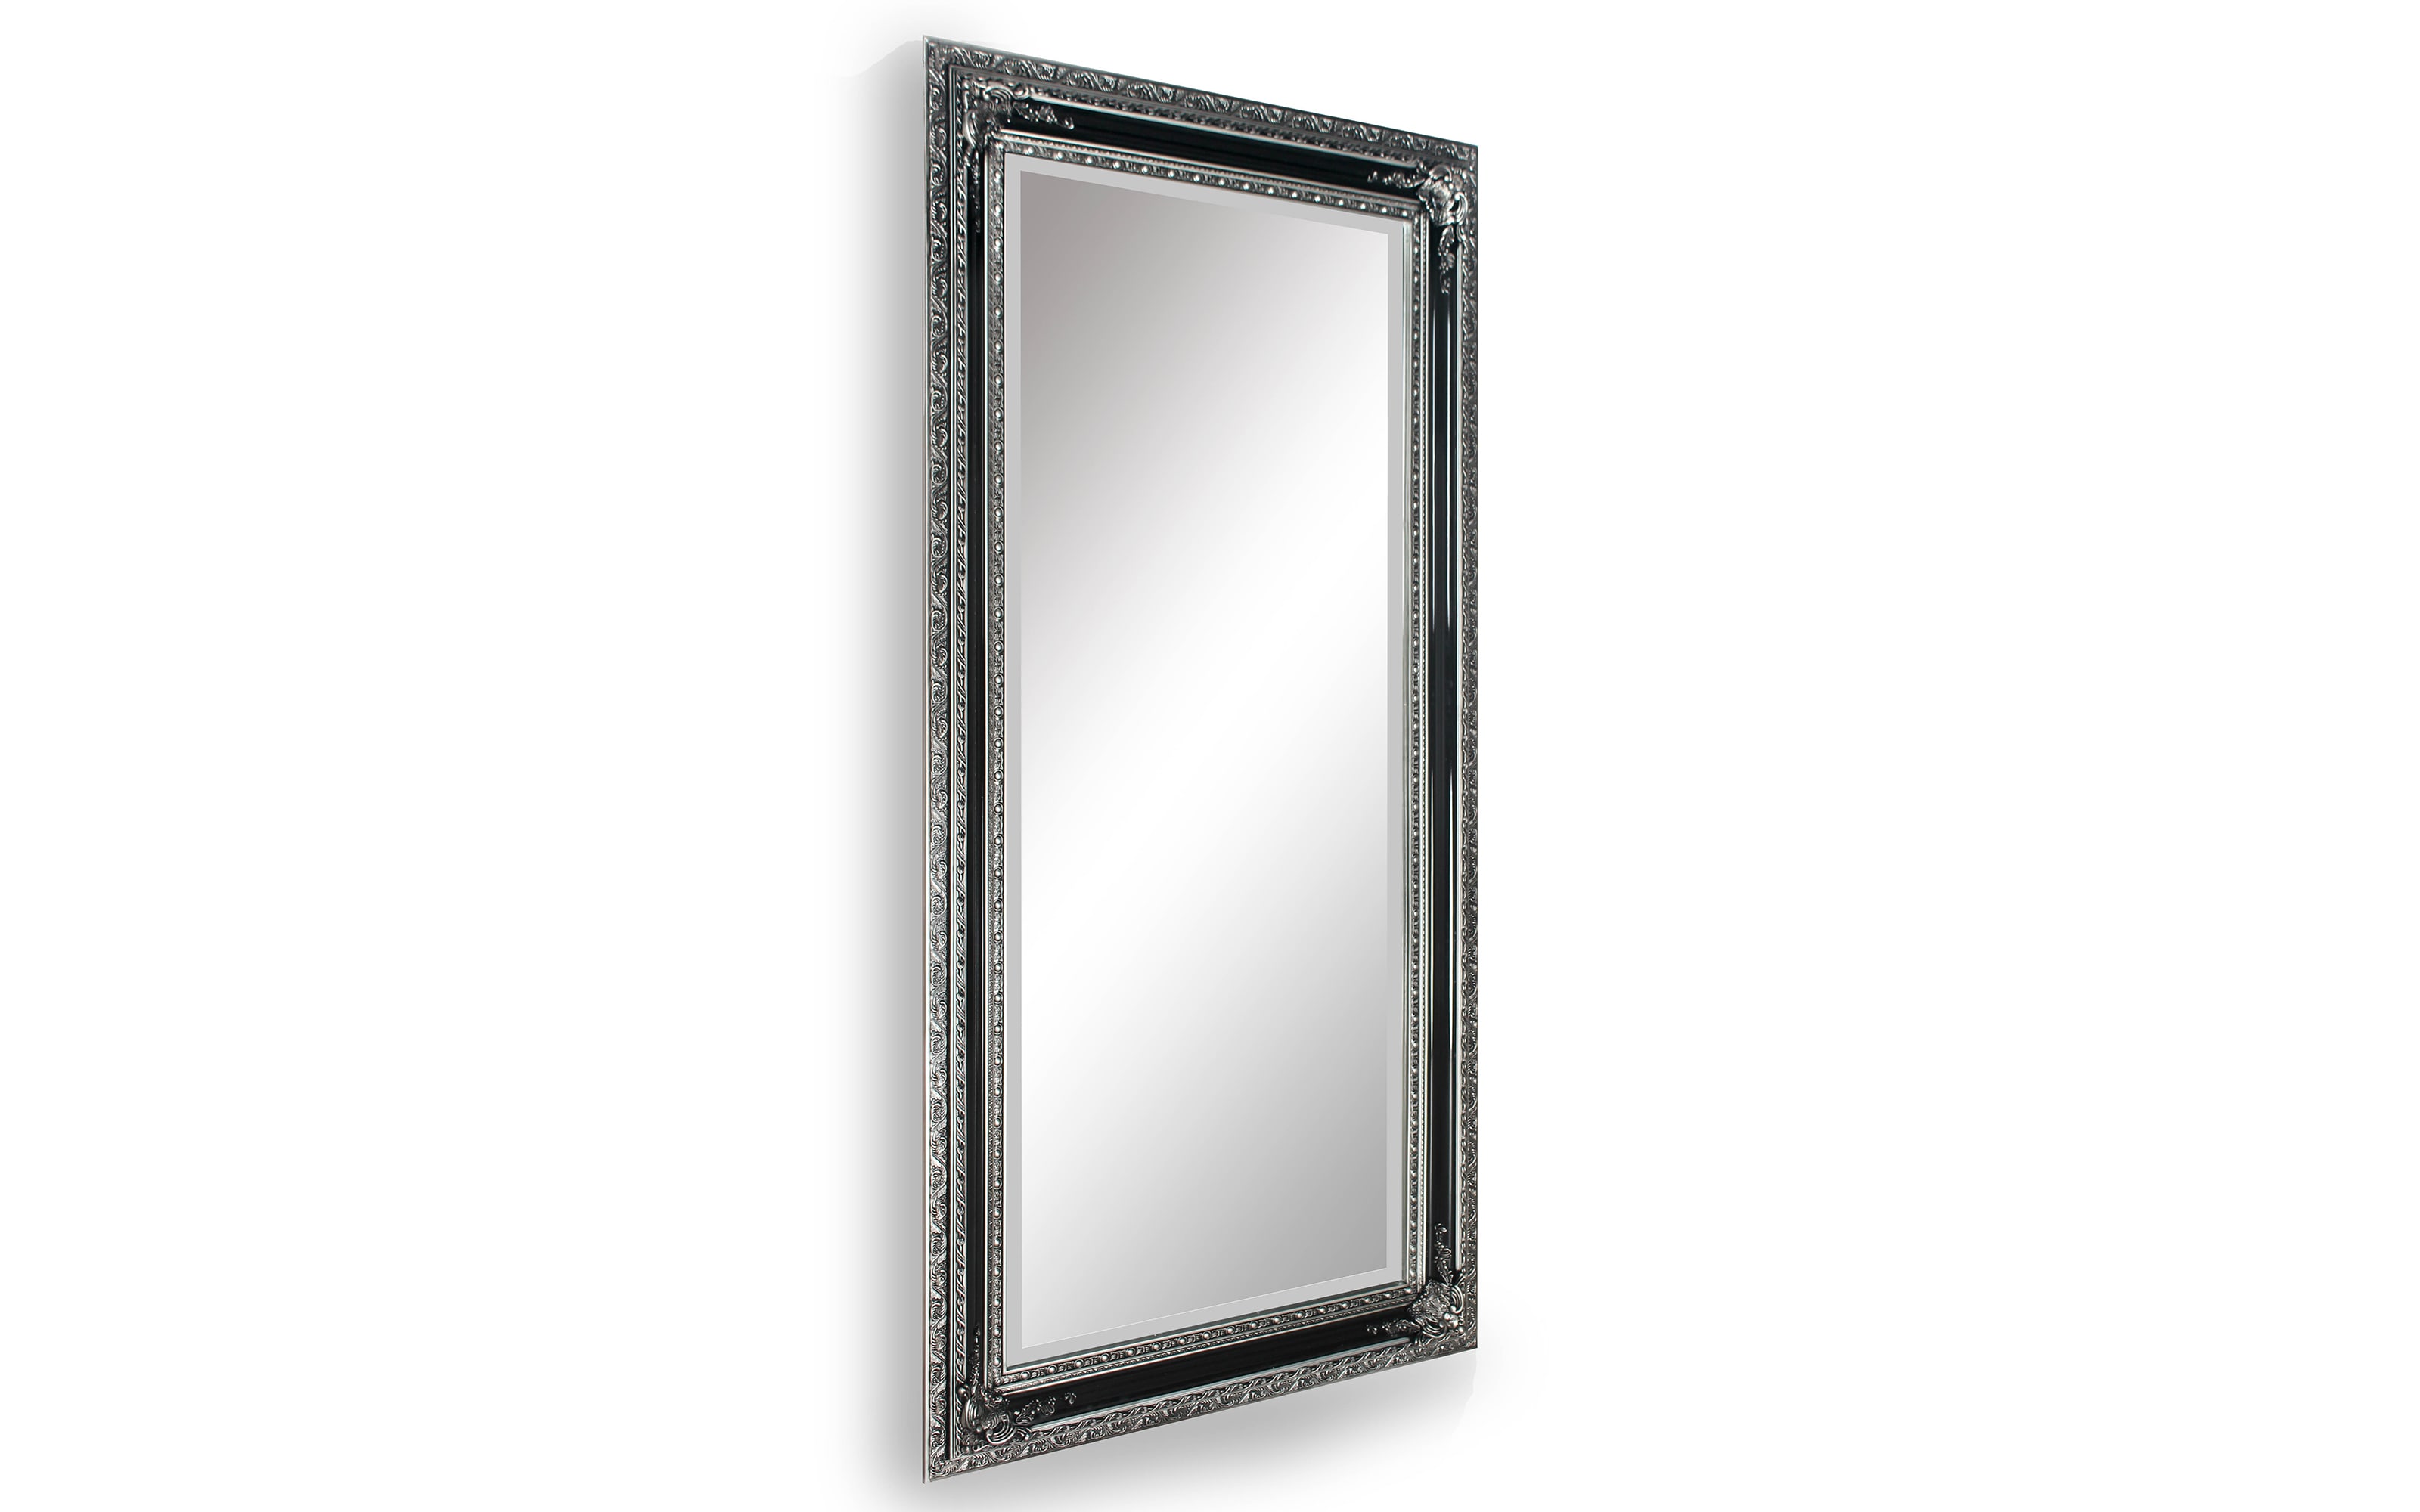 Rahmenspiegel Lara, schwarz/silberfarbig, 100 x 120 cm 